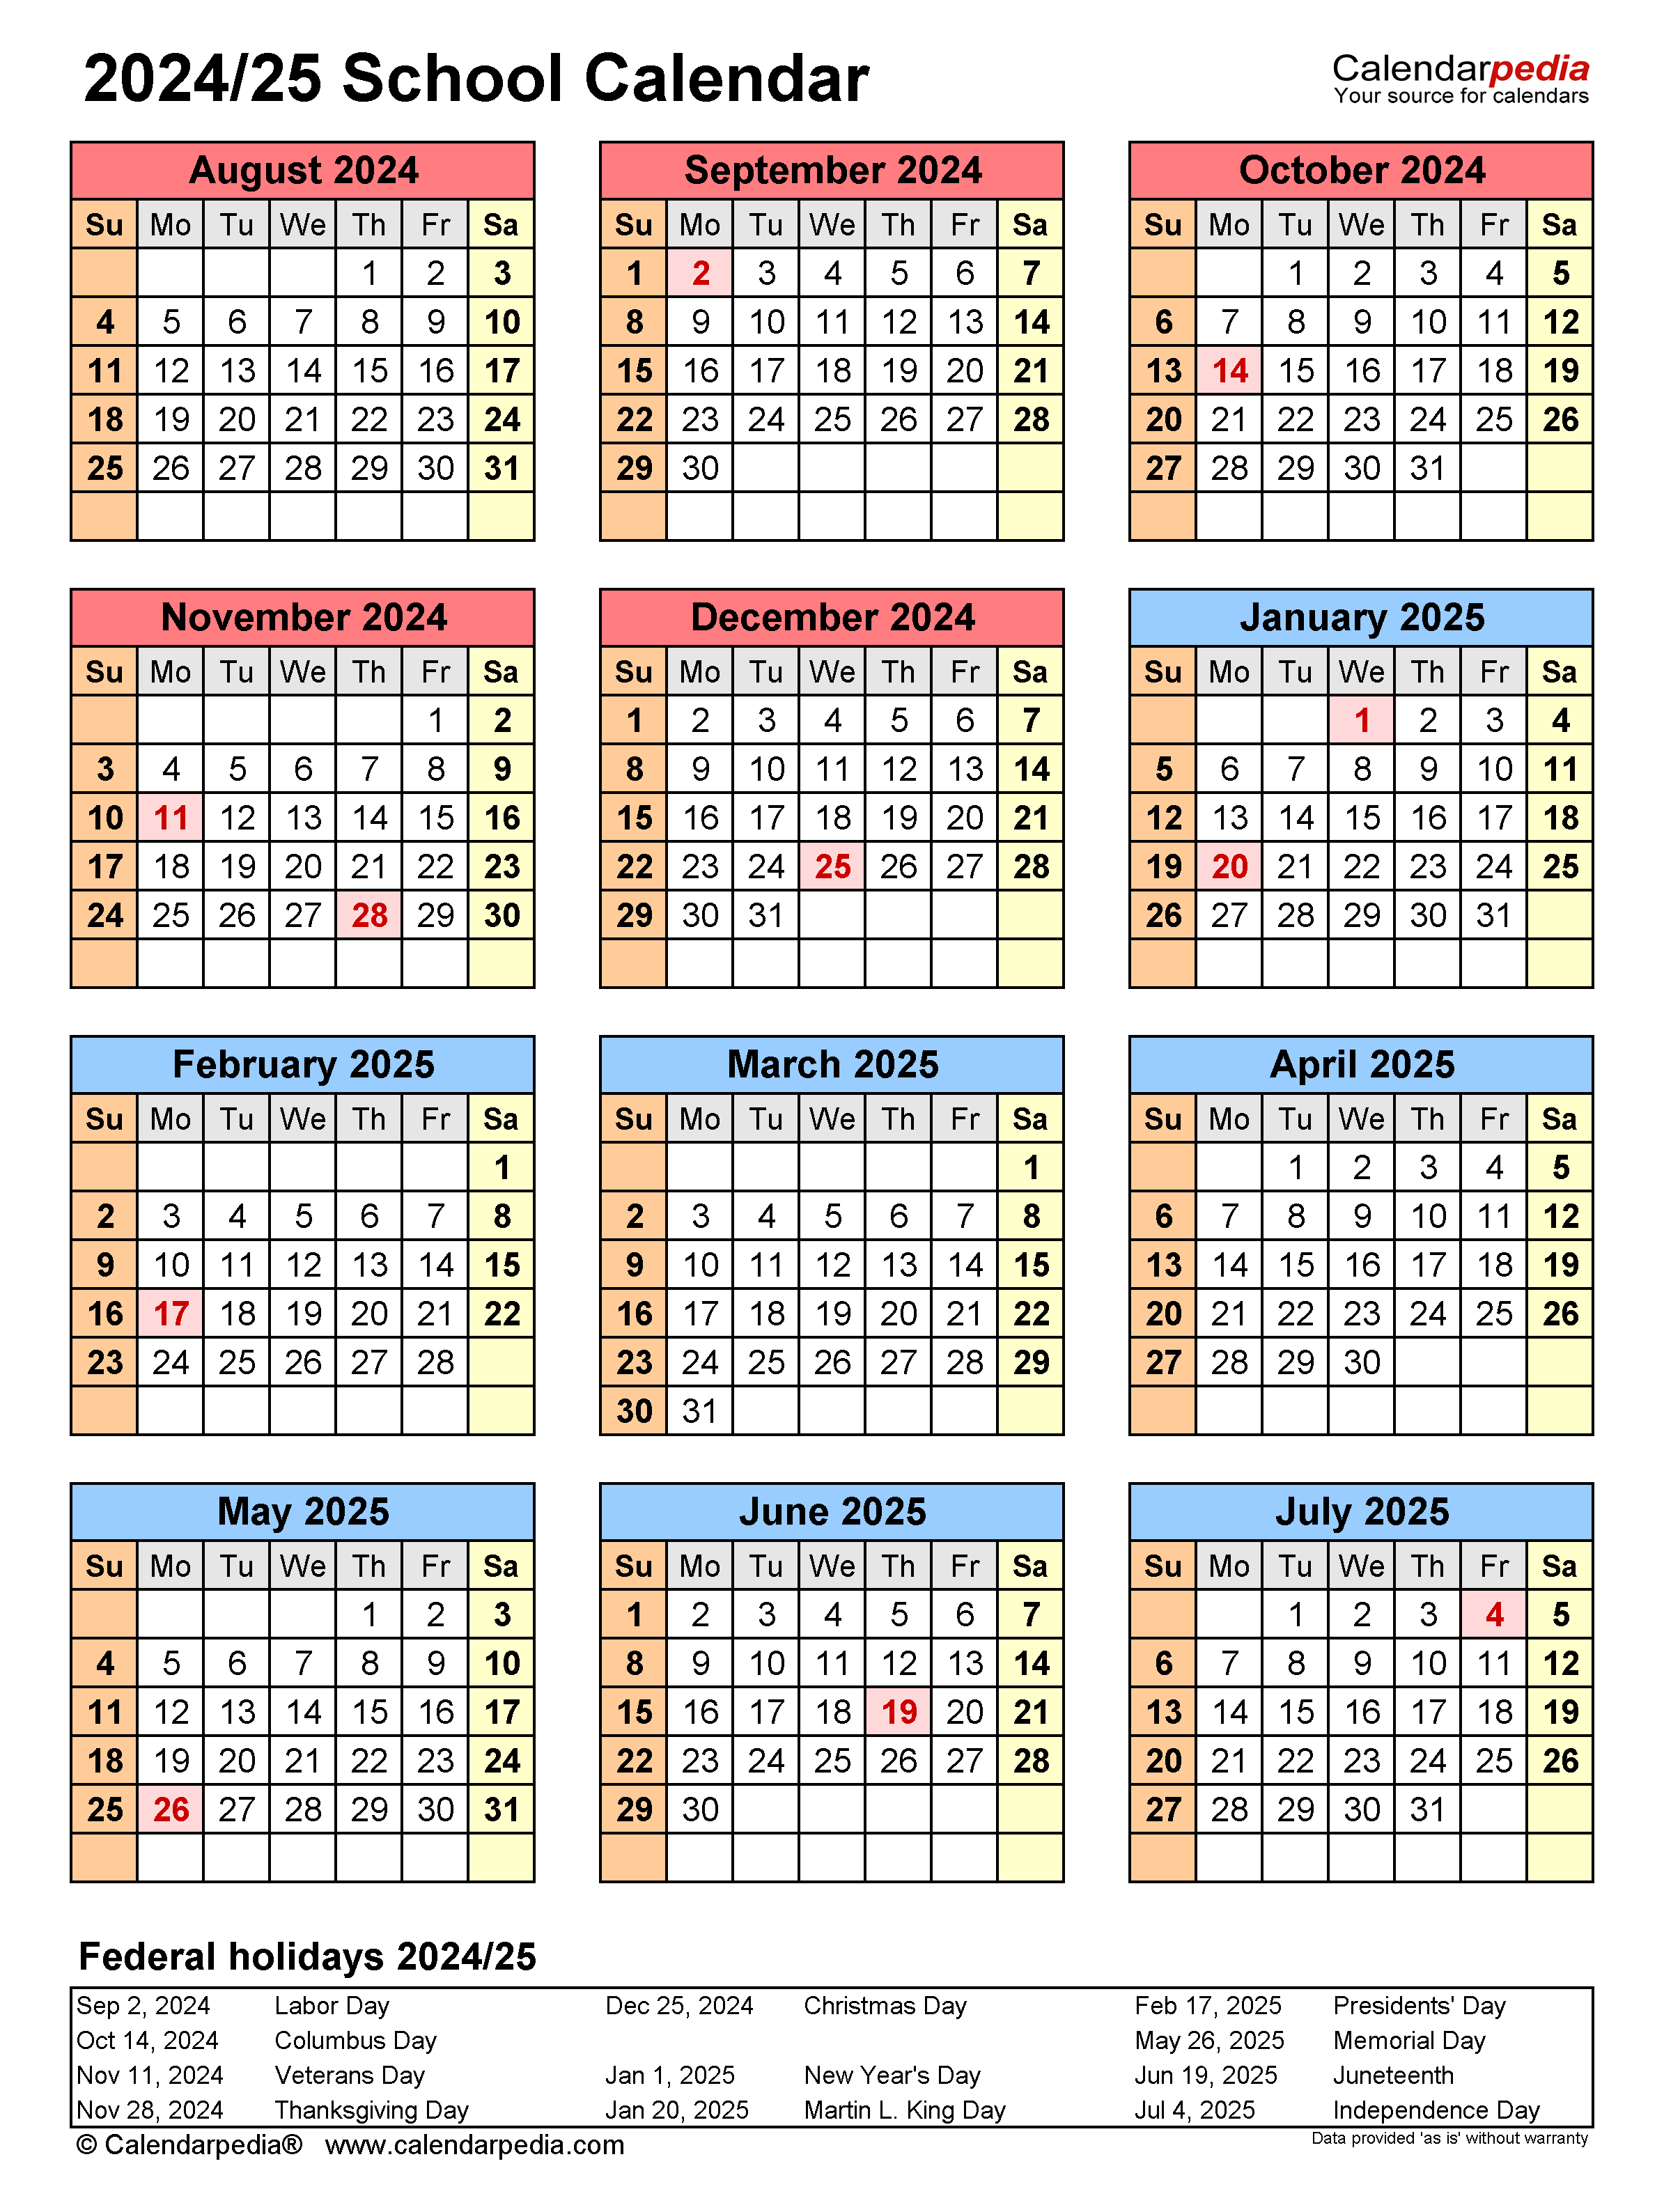 Victorian School Calendar 2025